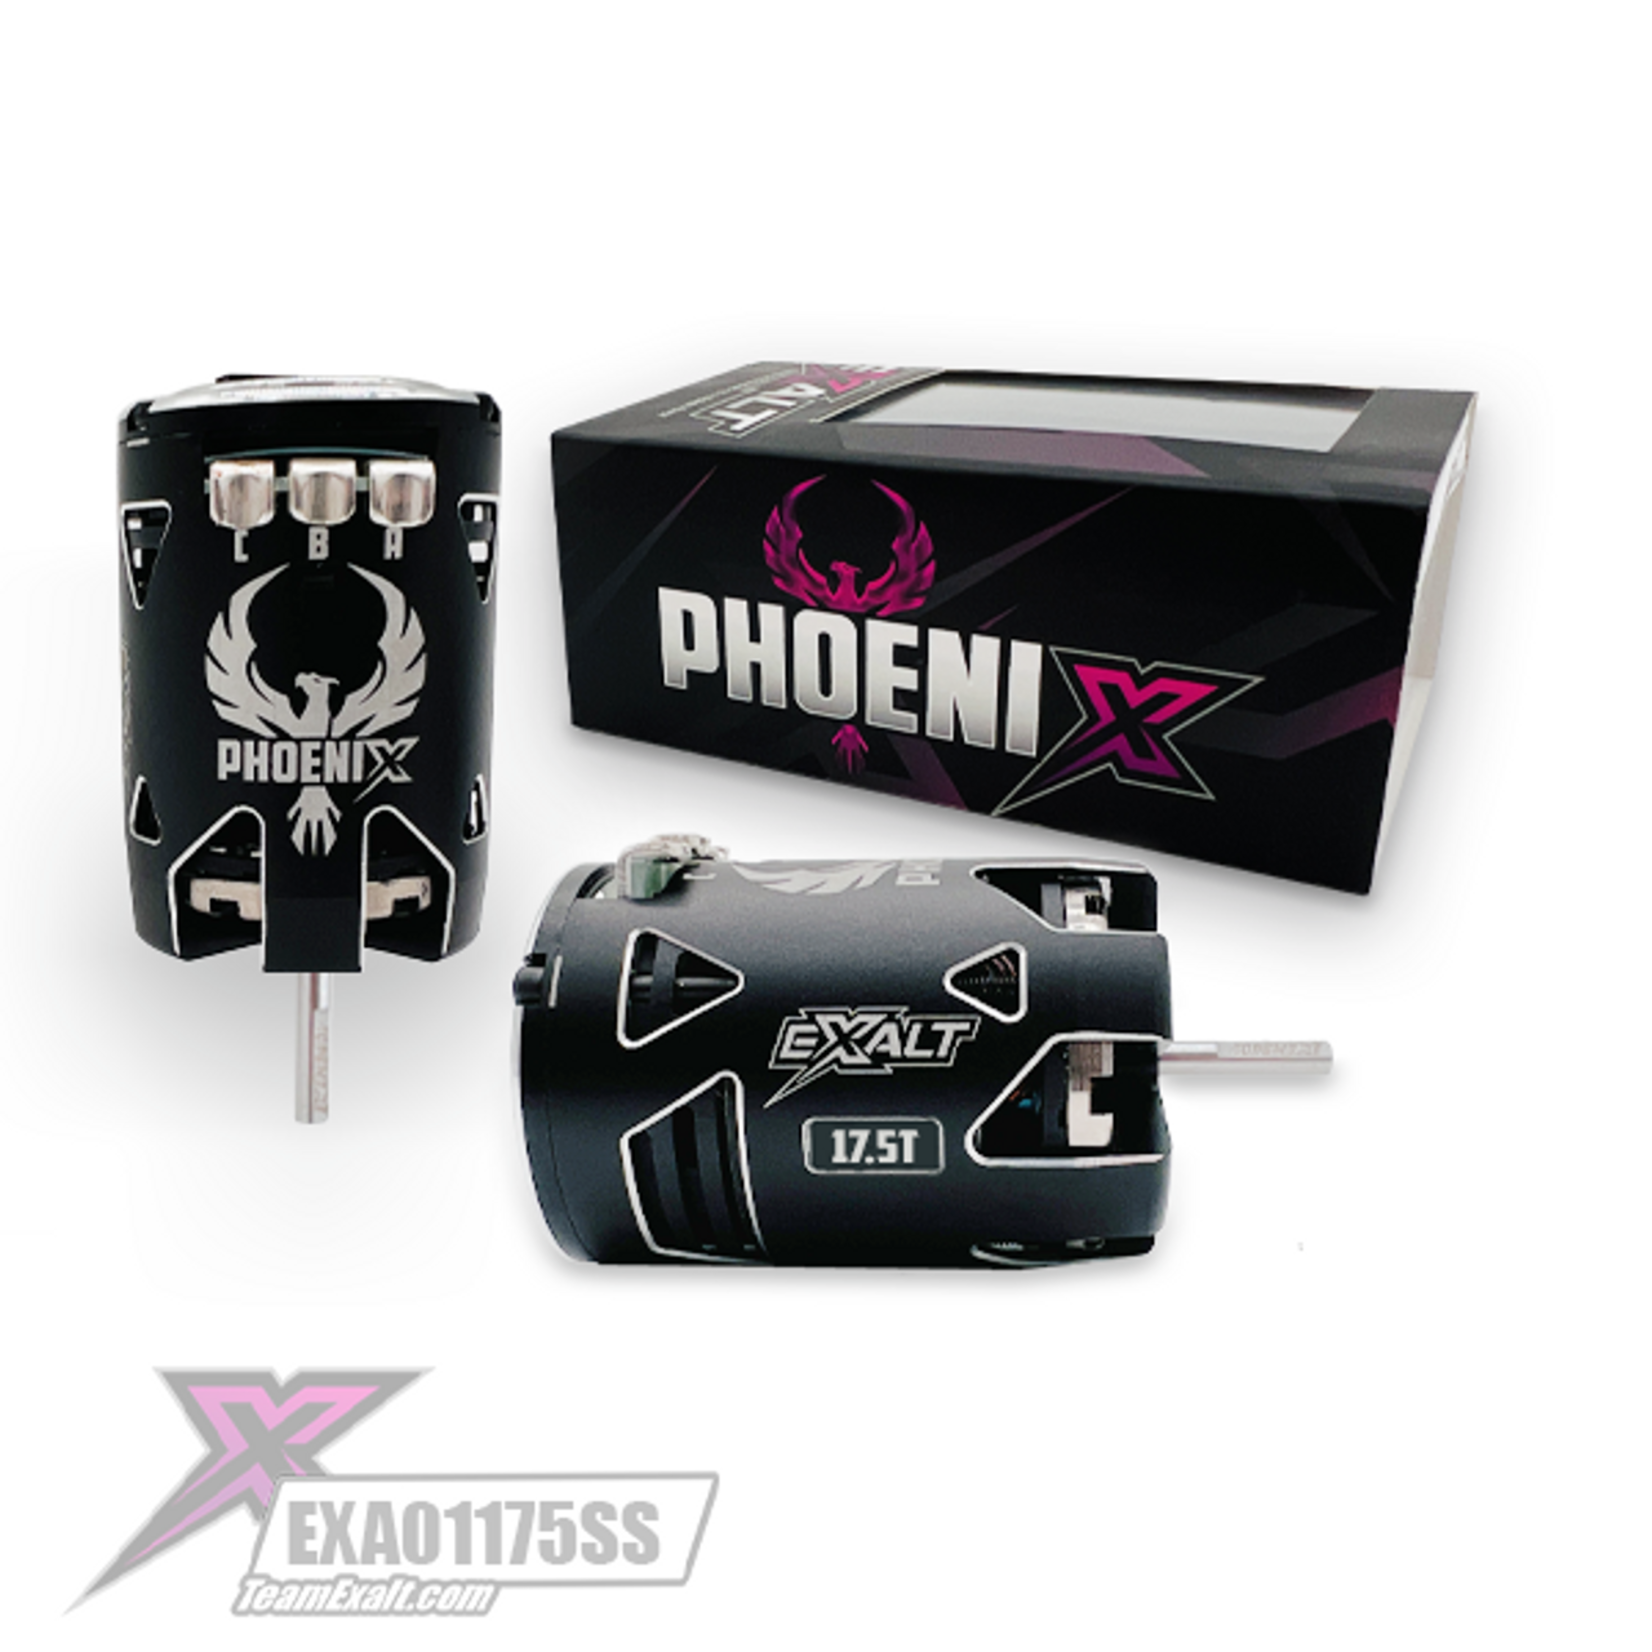 Exalt Exalt "Phoenix" Silver Spec Class Brushless Motor (17.5T) #EXA01175SS